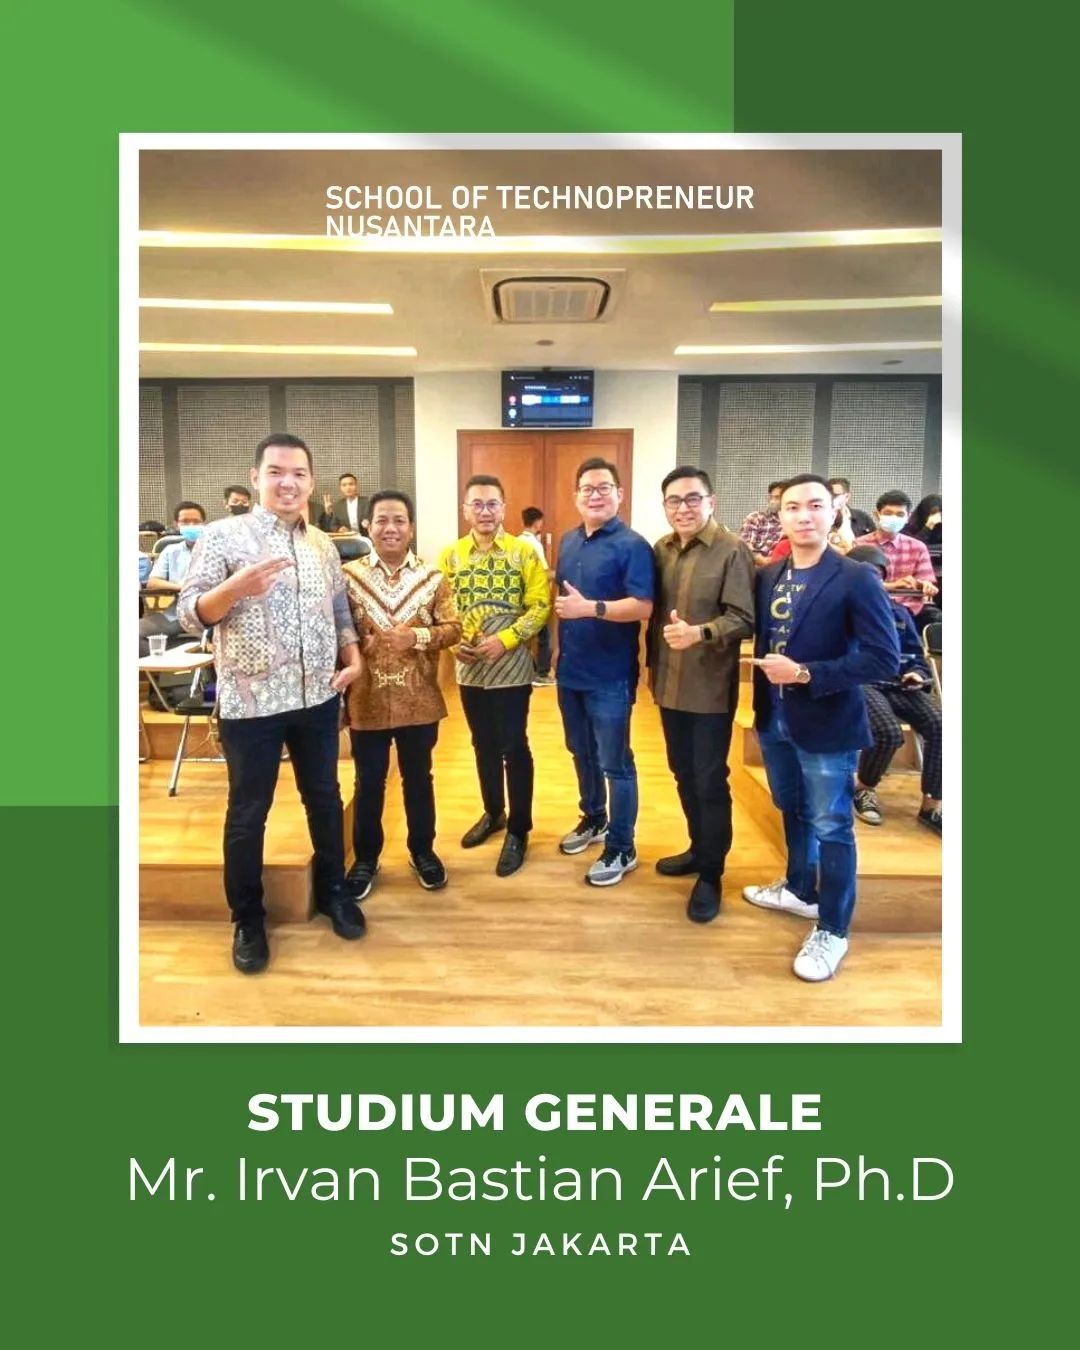 Event - 14 - School of Technopreneur Nusantara (SOTN) | College for Future Technopreneur